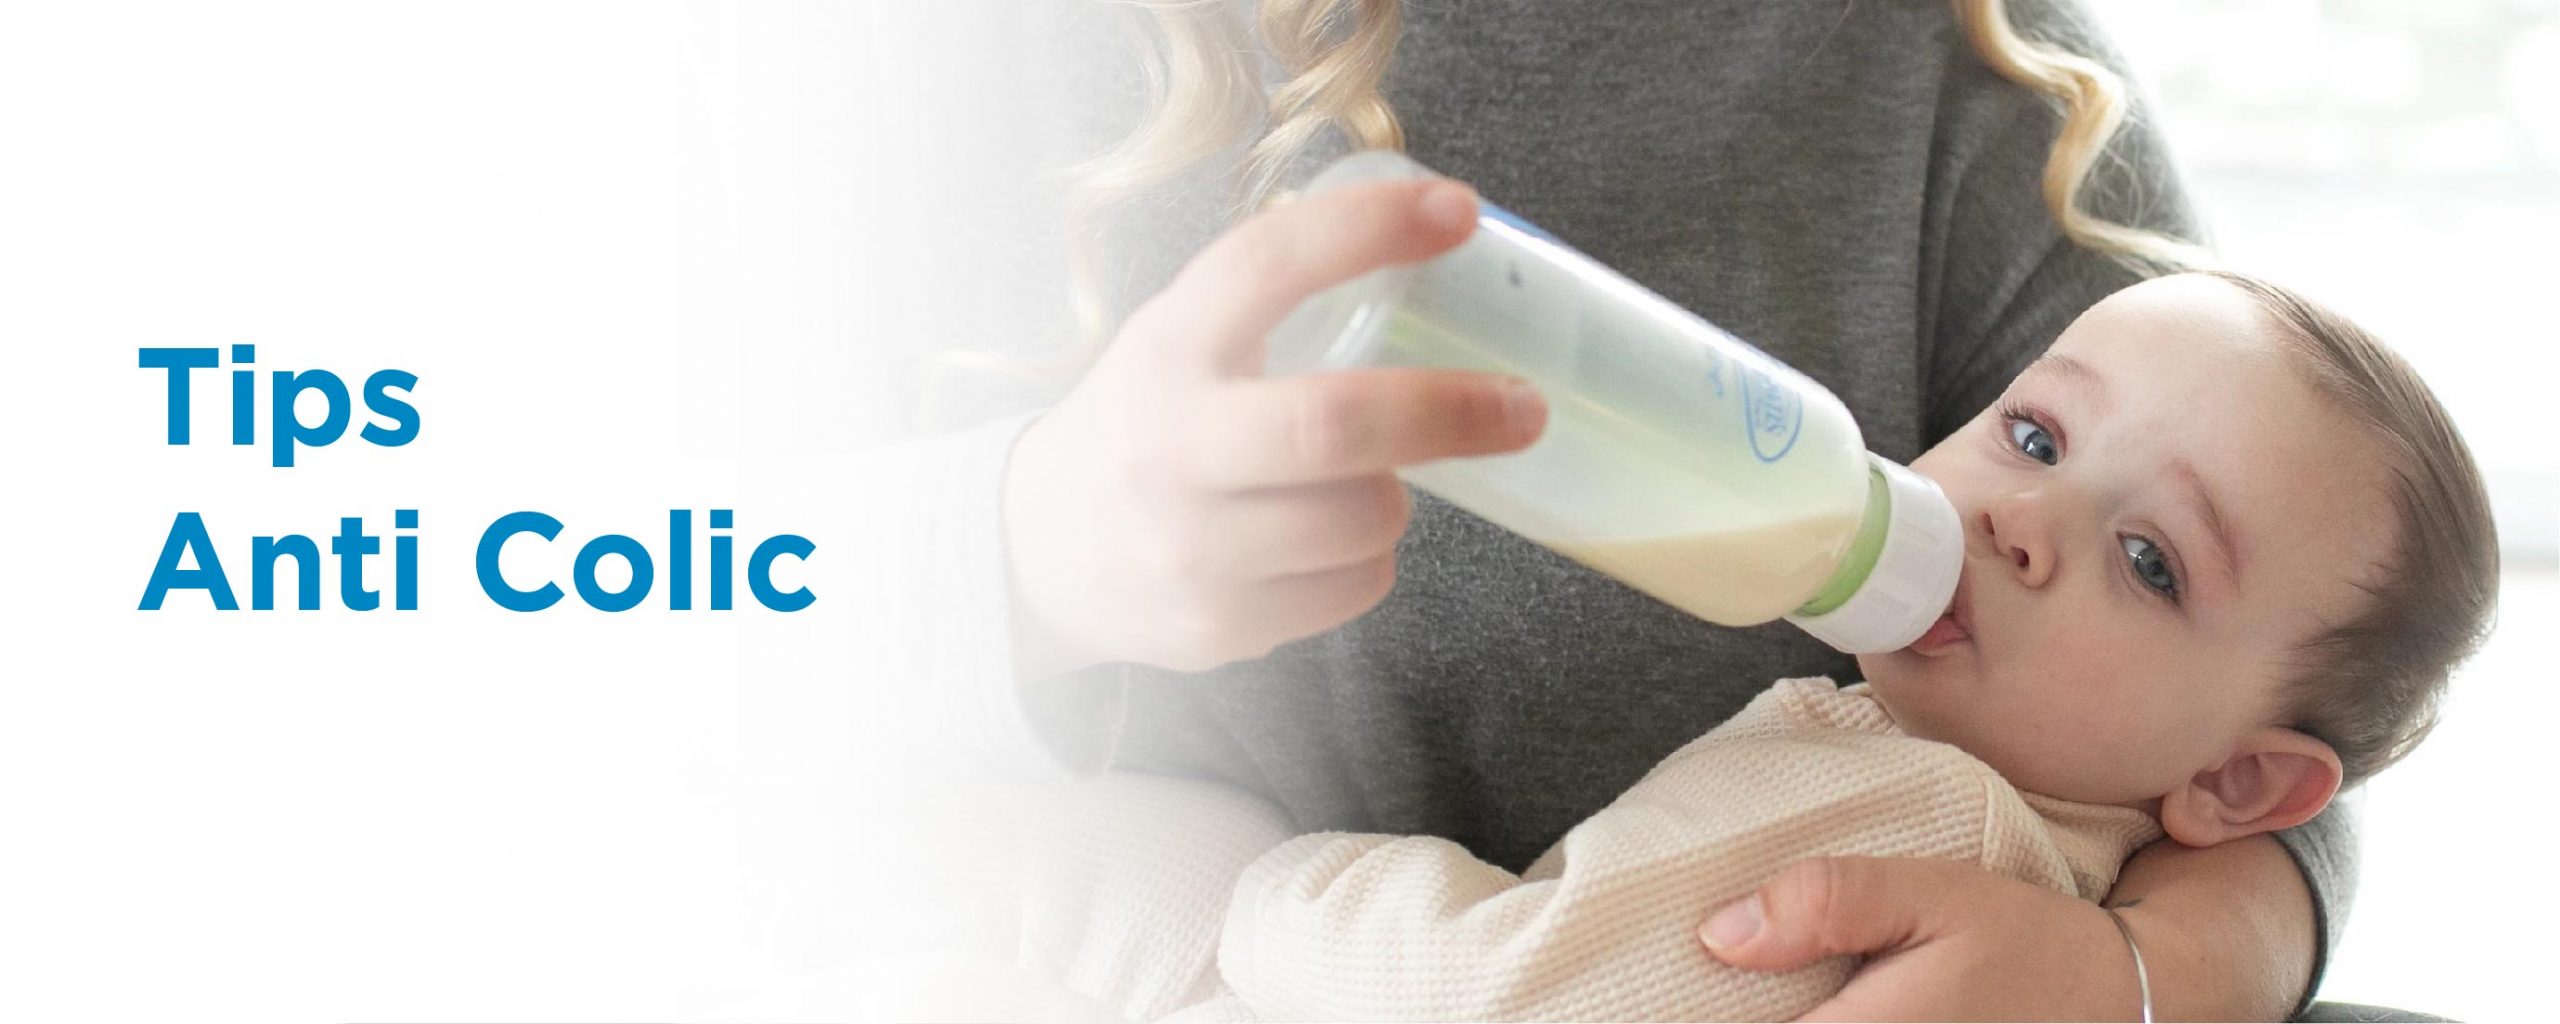 Tips anti kolik 
masalah kolik
kolik pada bayi
botol susu anti kolik